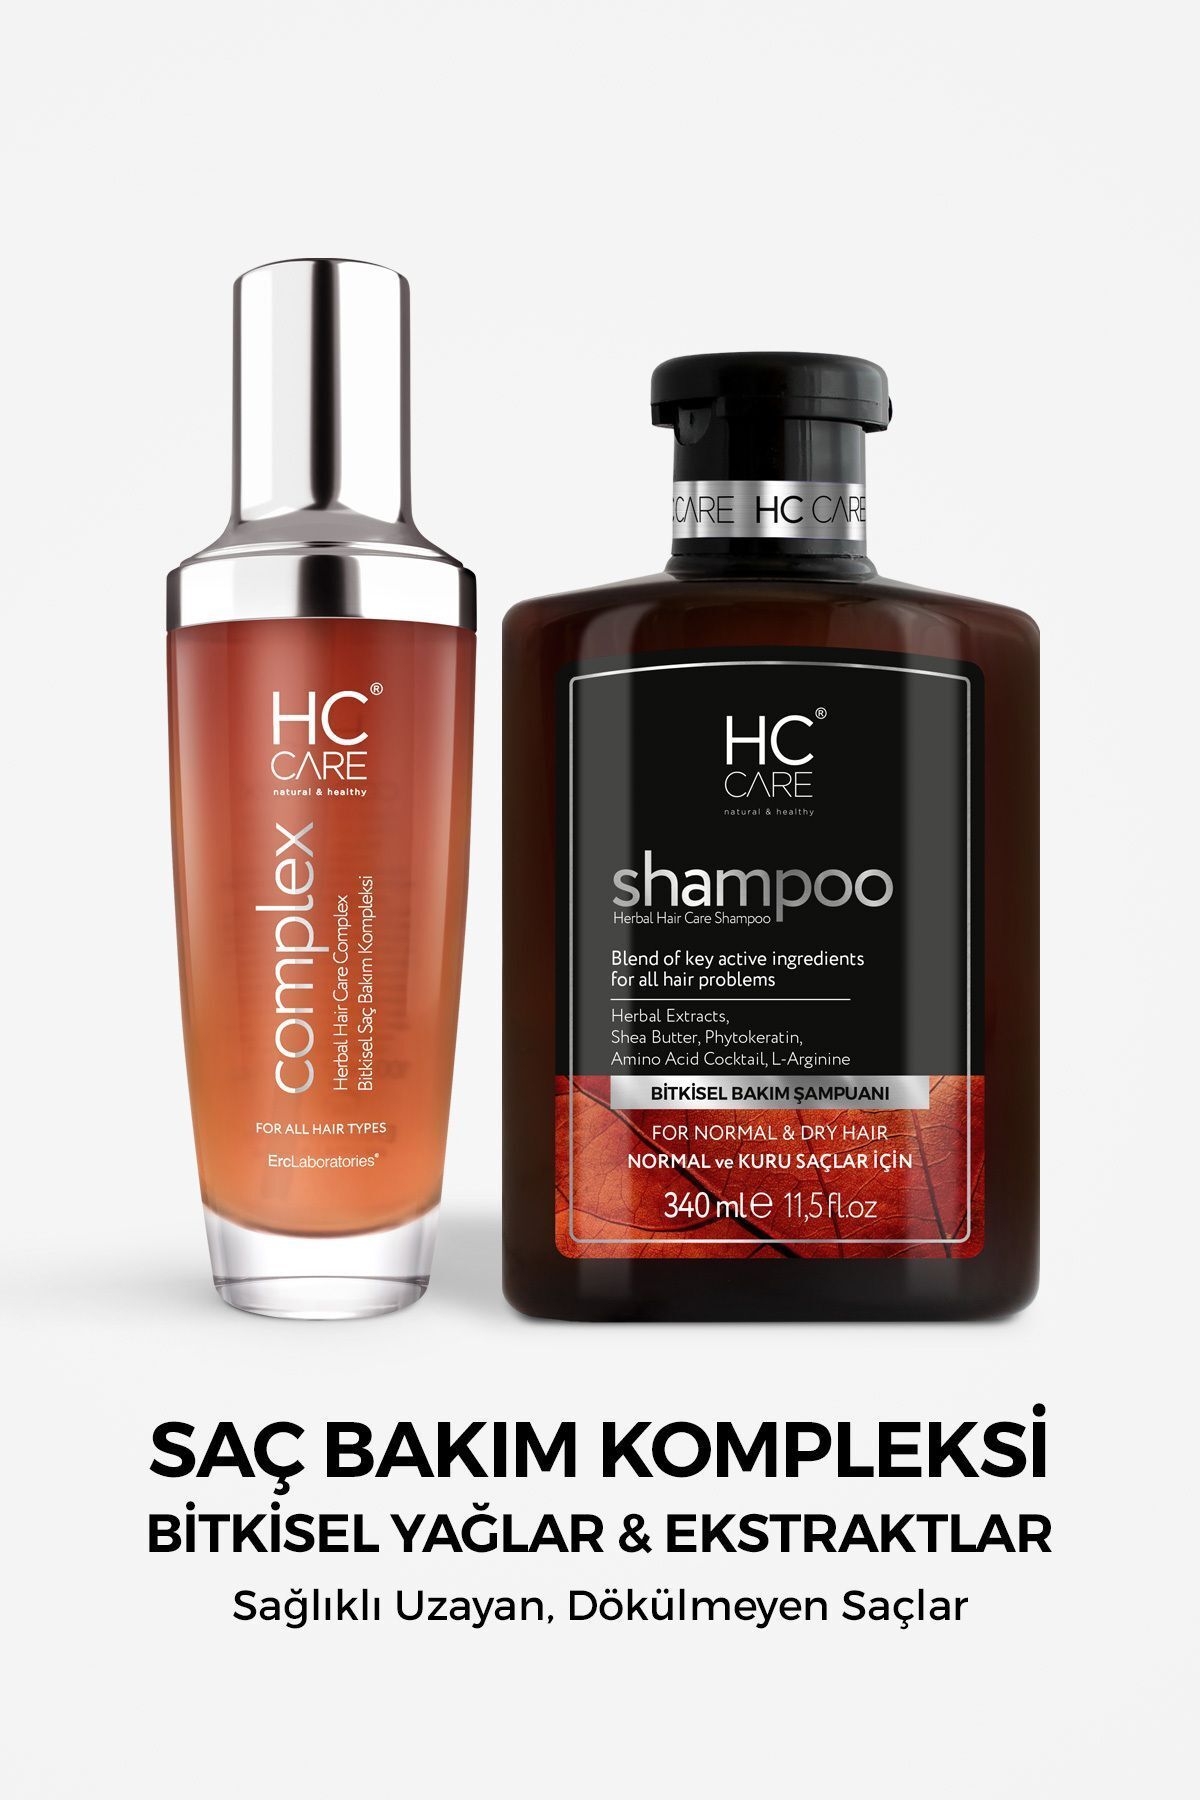 HC Care Complex Şampuan 2li Bitkisel Saç Bakım Seti